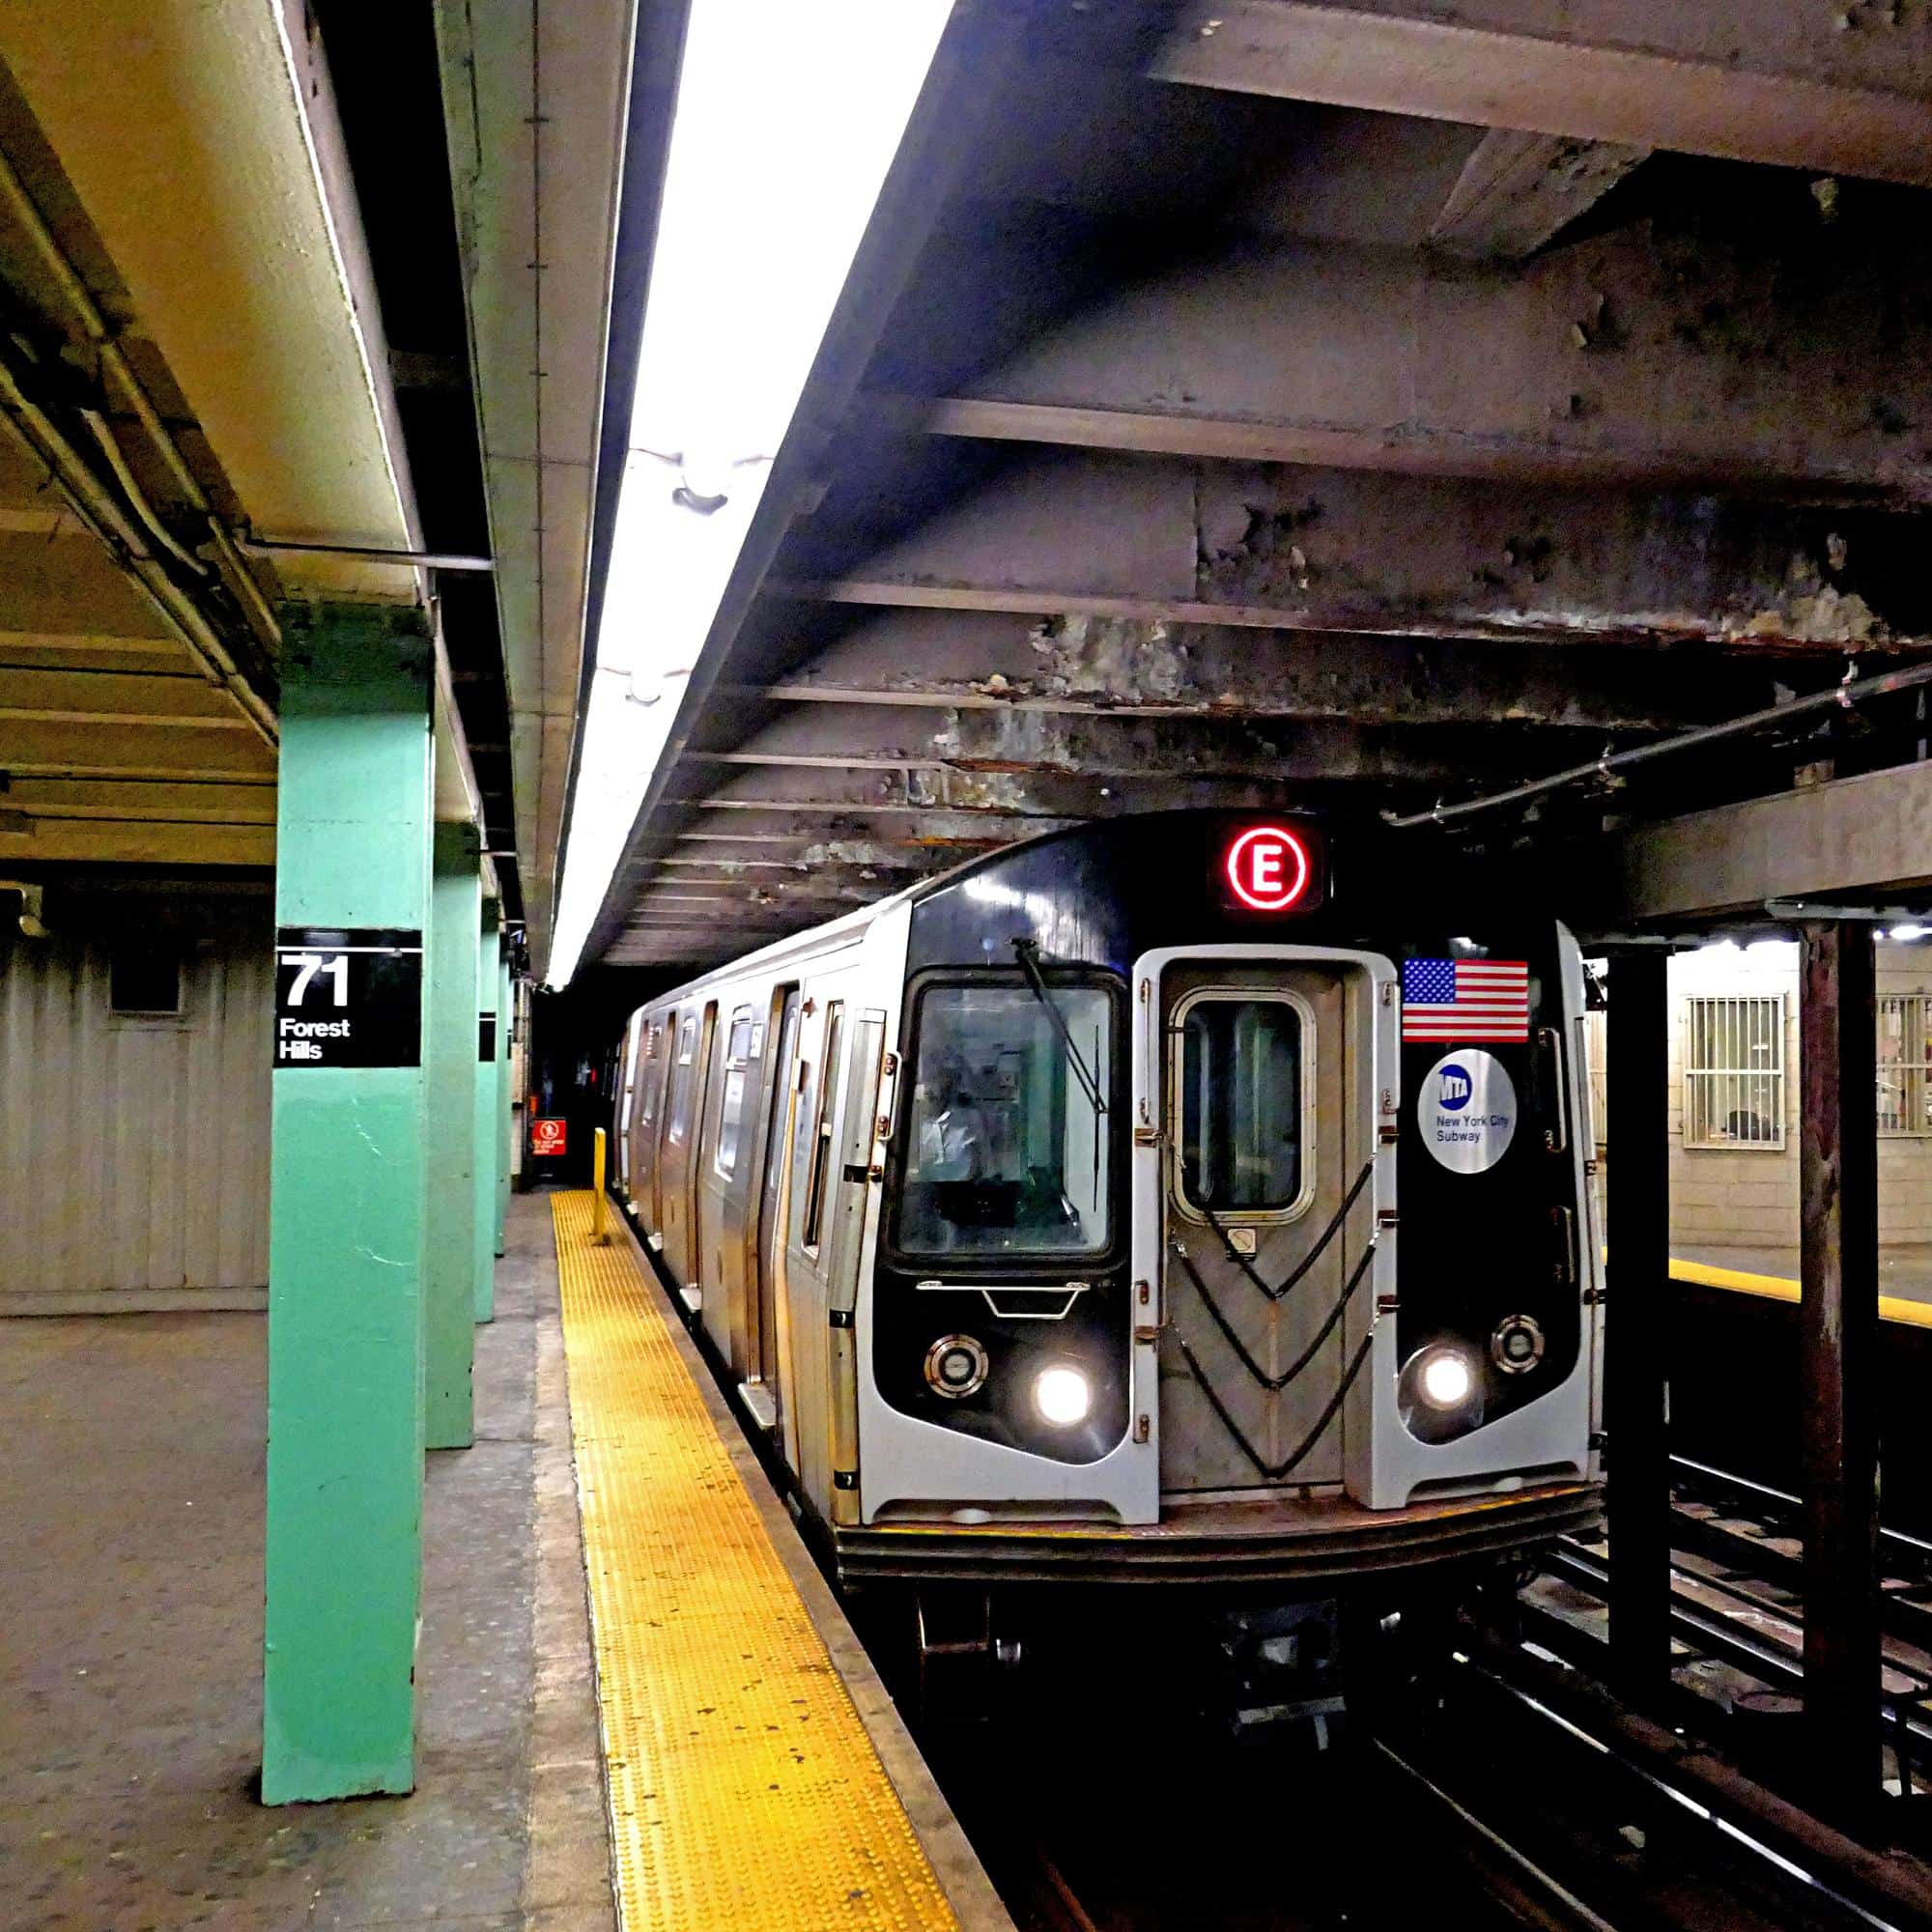 Forest+Hills+Queens+New+York | New York City Subway - 71, Forest Hills